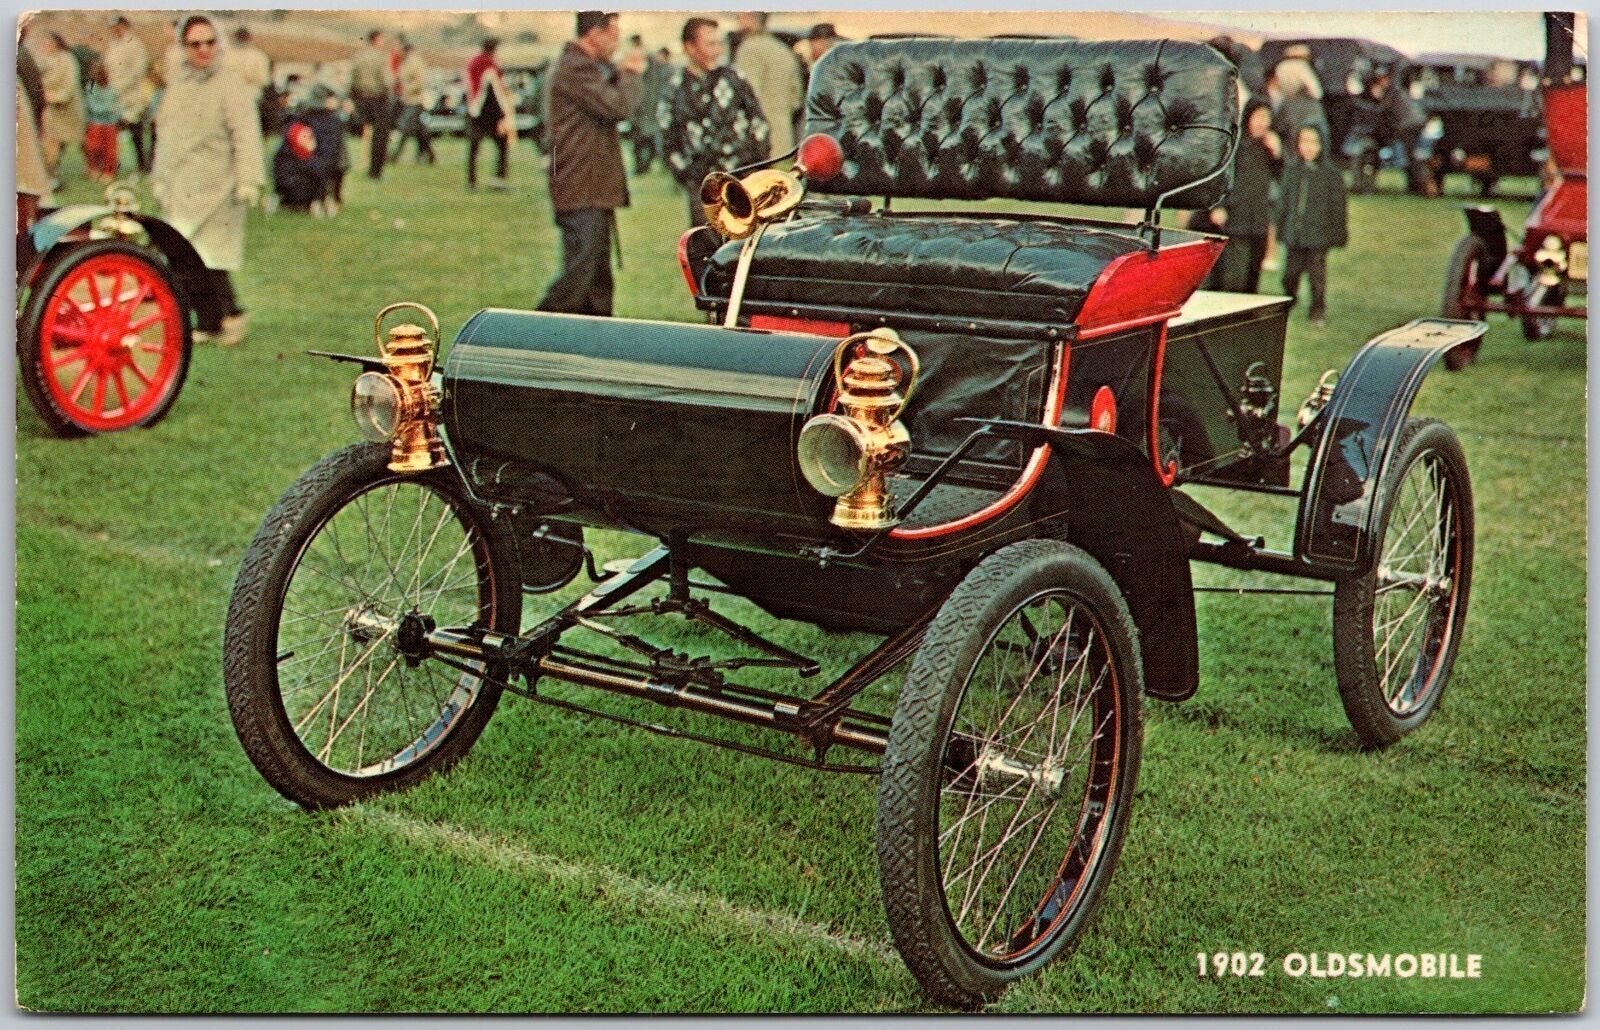 1902 Oldsmobile, American Automobile, Groundbreaking Design Vintage Postcard